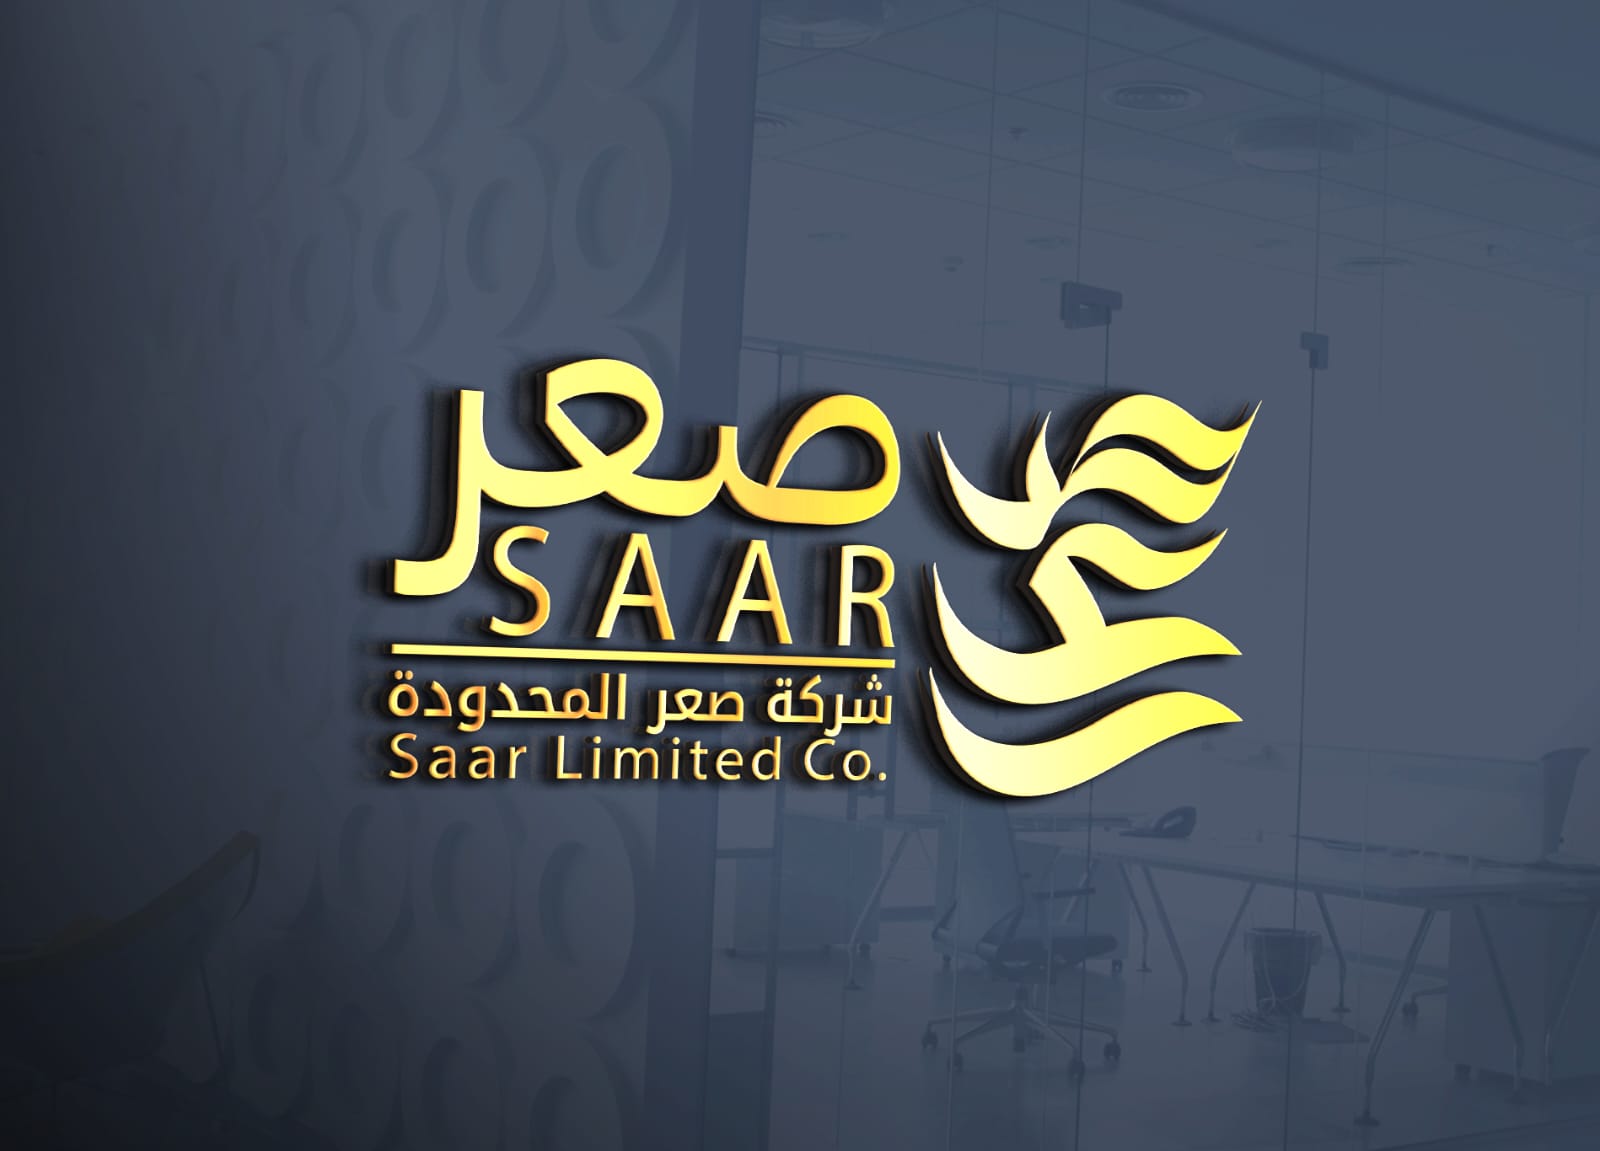 SAAR Limited Co